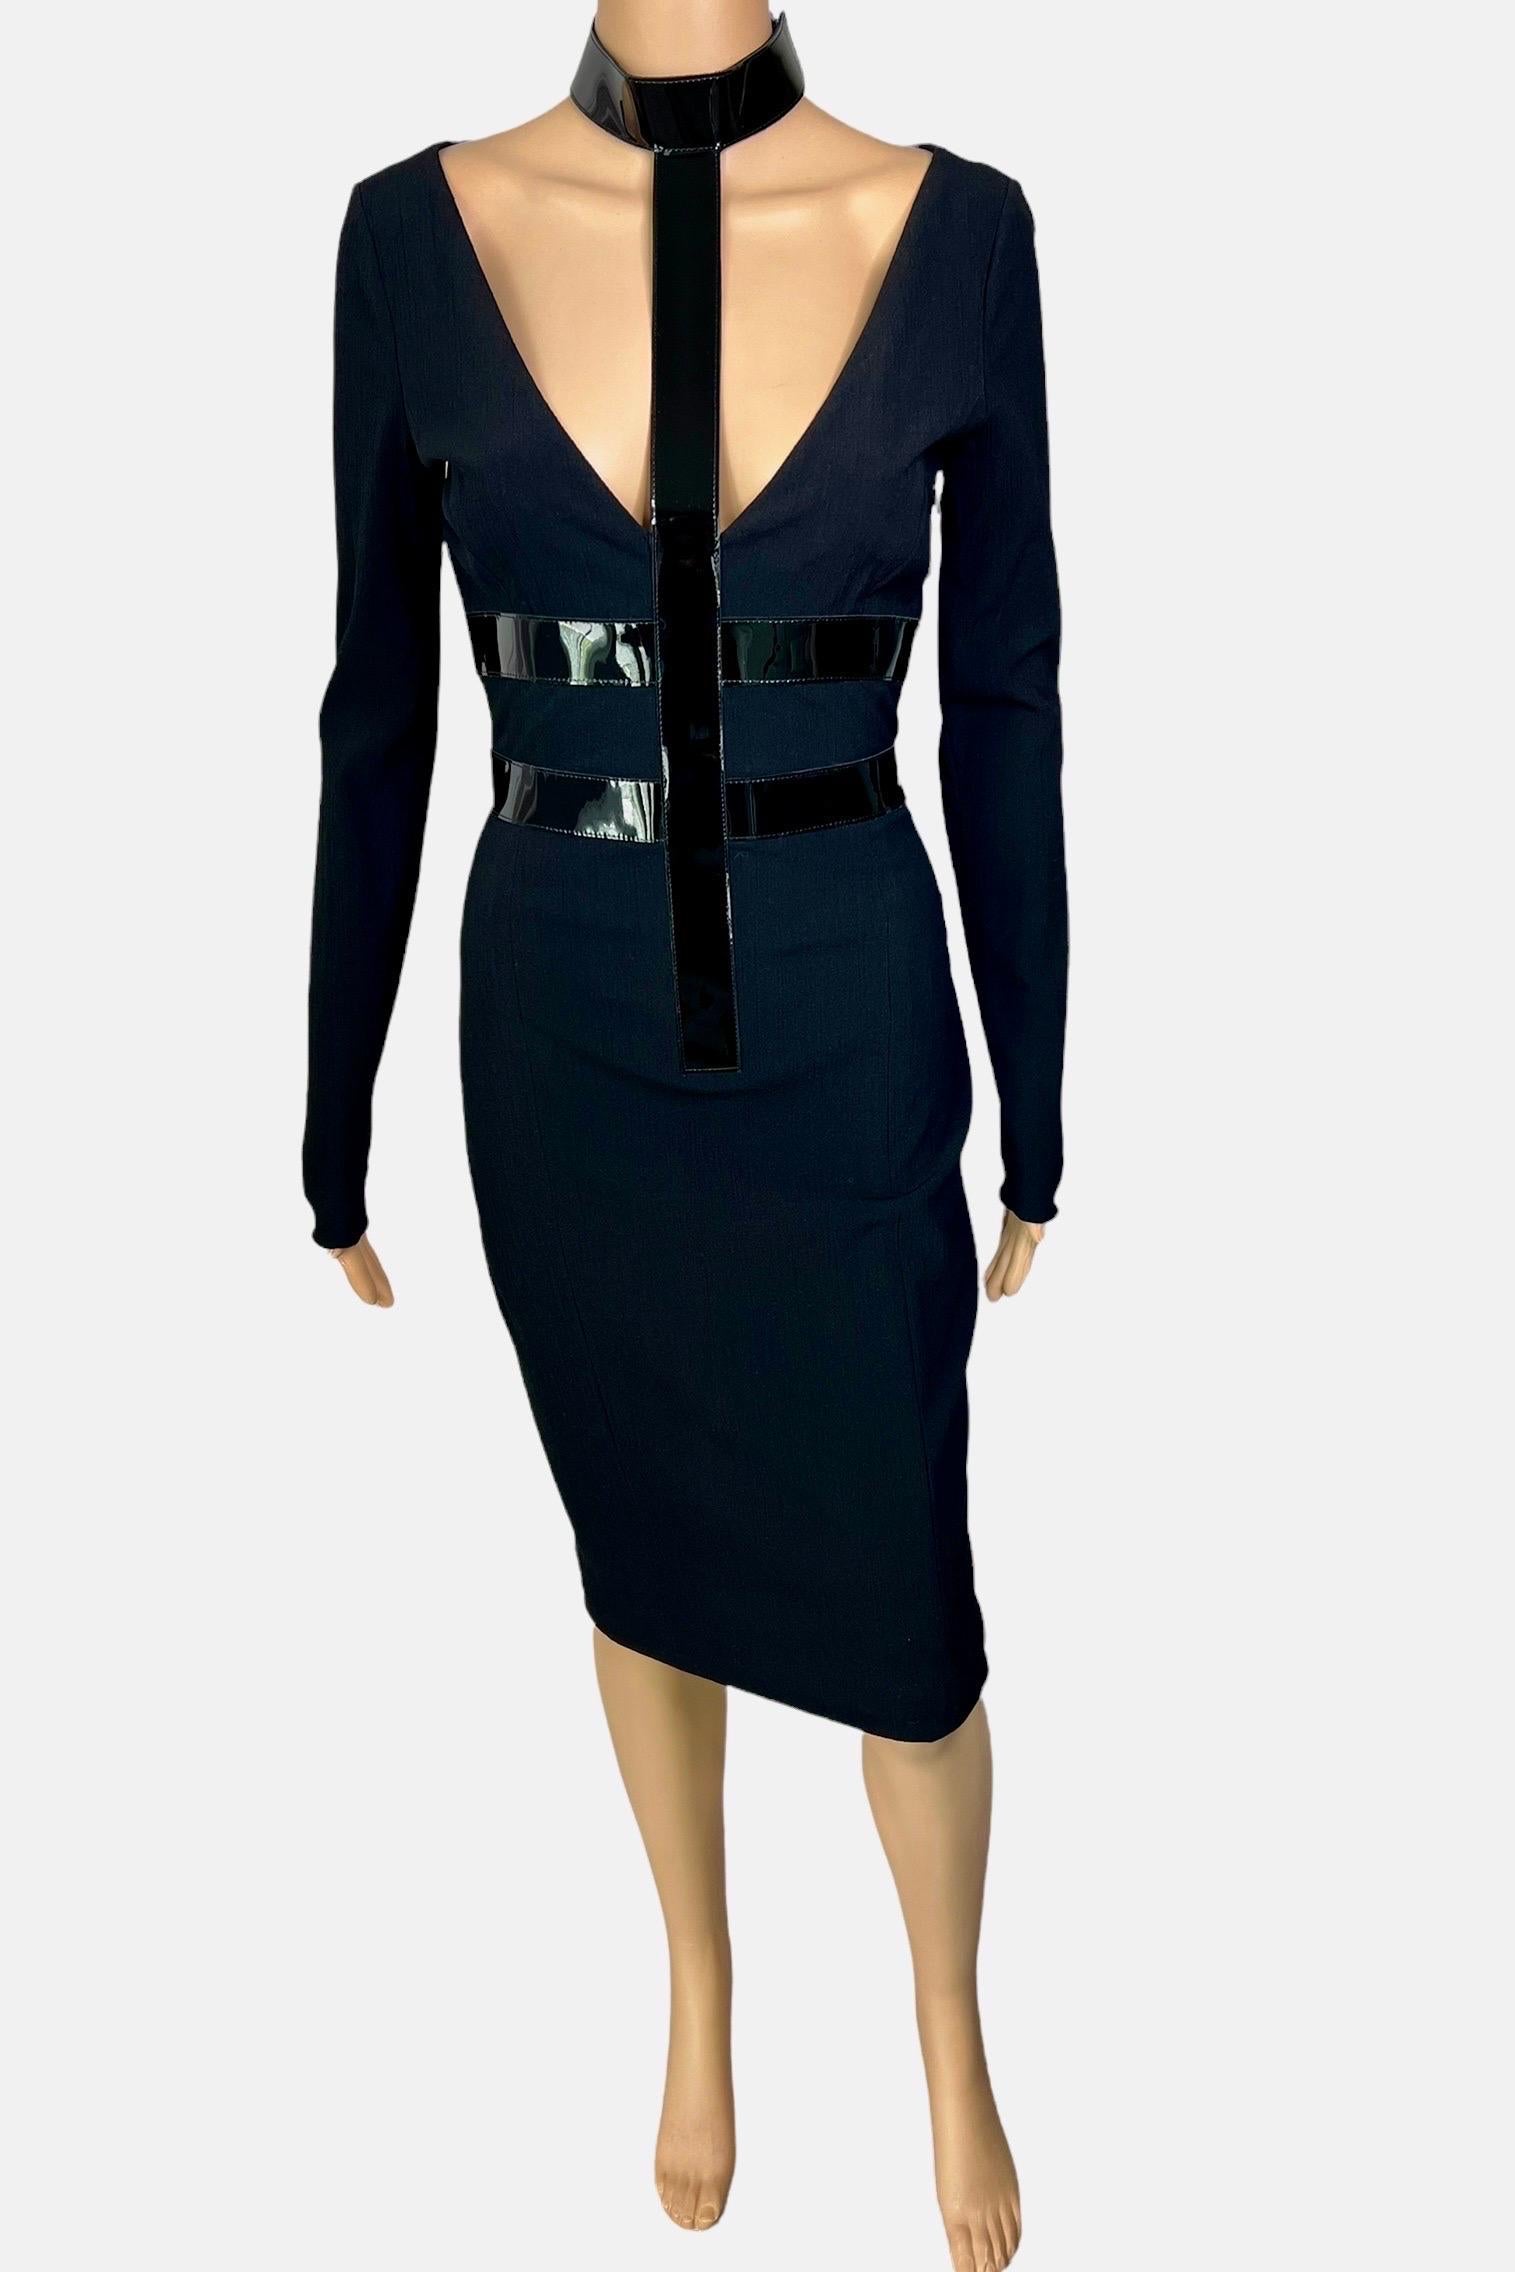 Versace F/W 2013 Bondage Vinyl Collar Plunged Cutout Black Dress For Sale 4